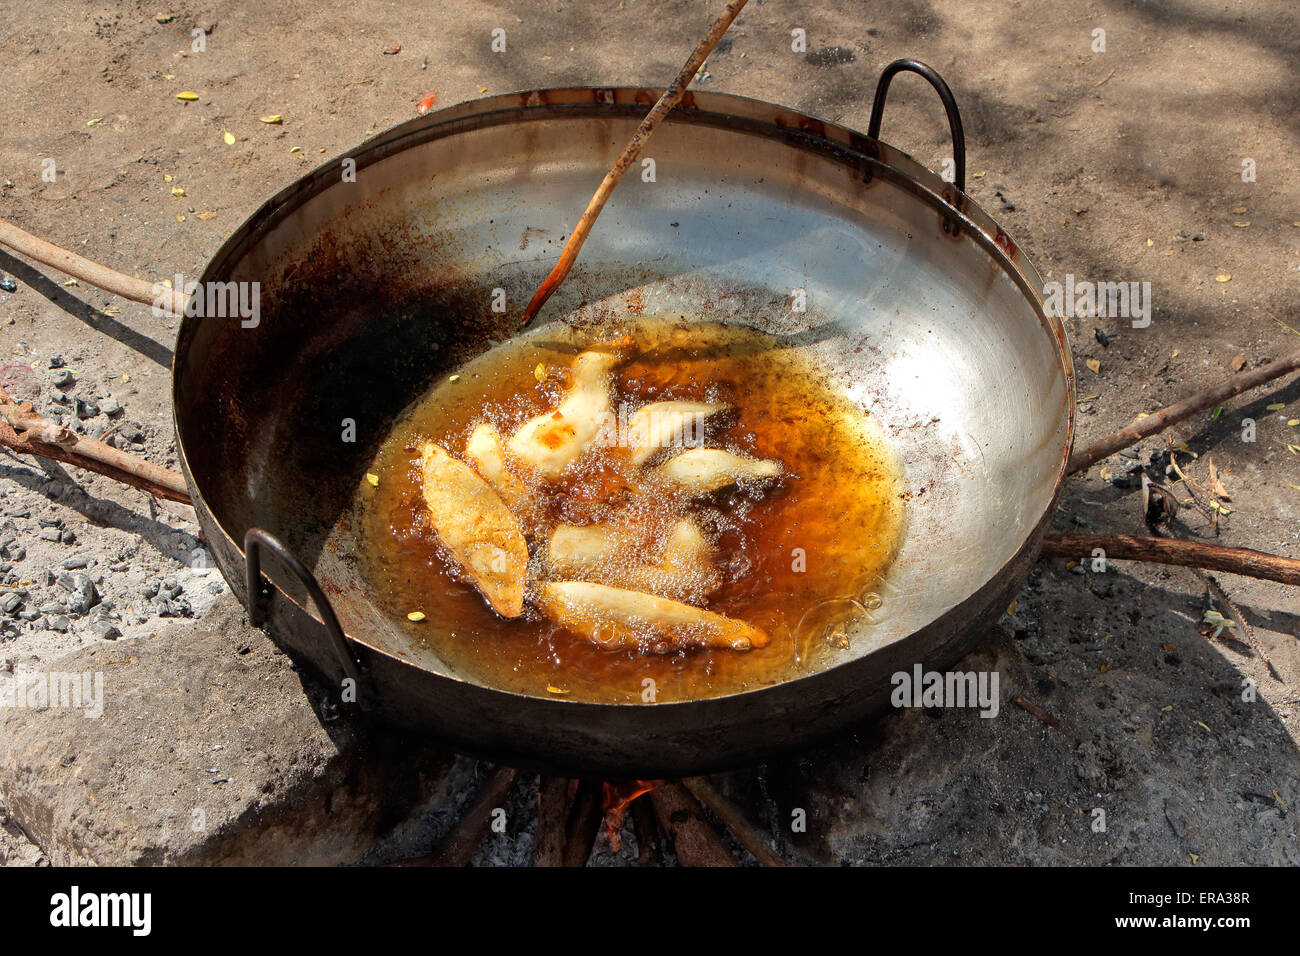 Food fried in oil on an outdoor wood fire in a rural Zanzibar settlement Stock Photo